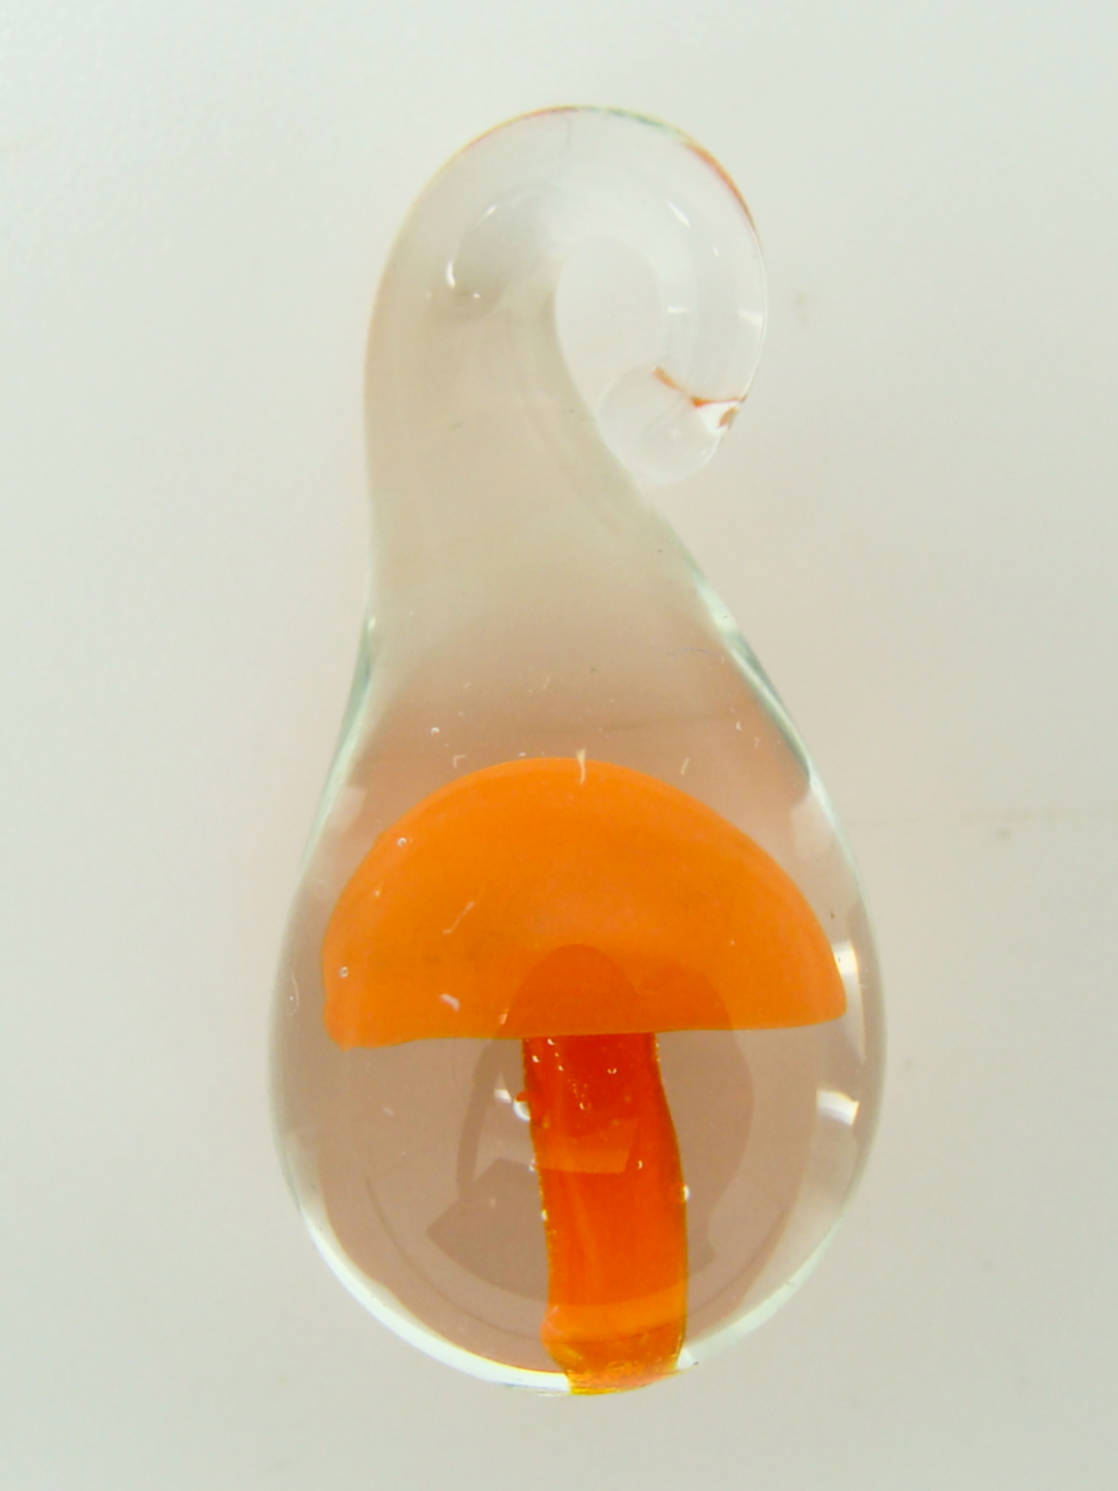 Pend-276 pendentif champignon orange verre